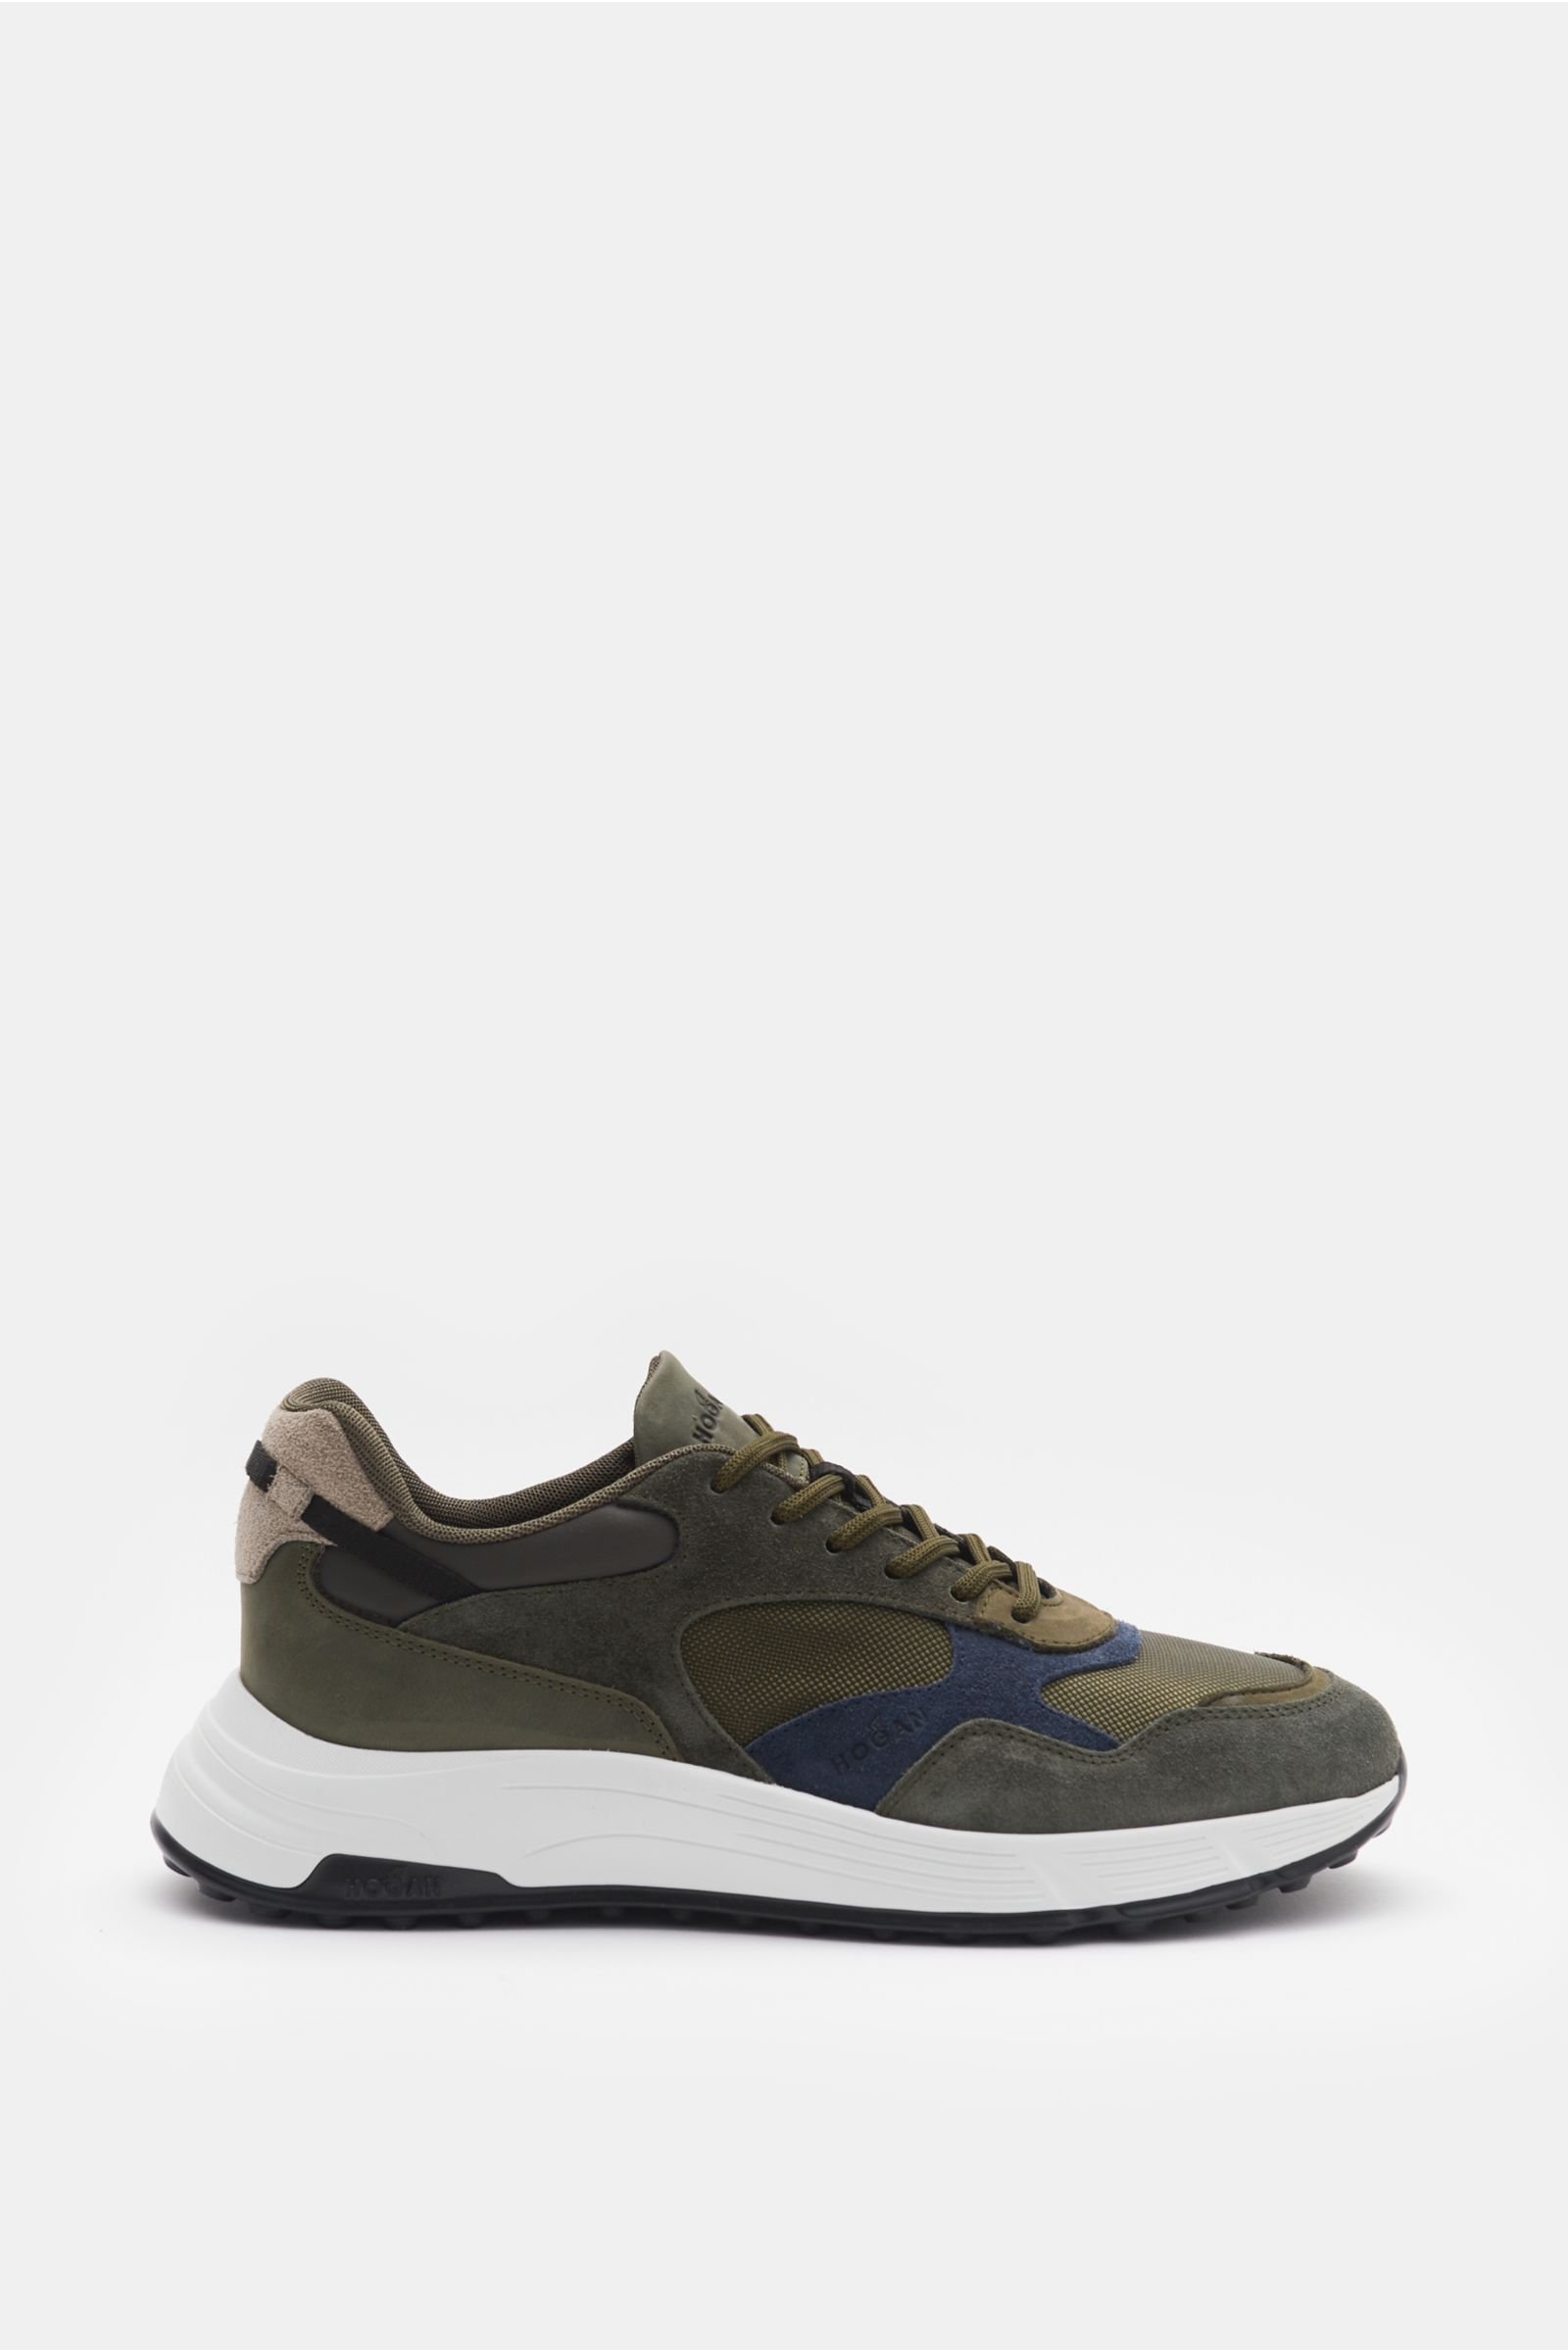 Sneakers 'Hyperlight' olive/grey/navy